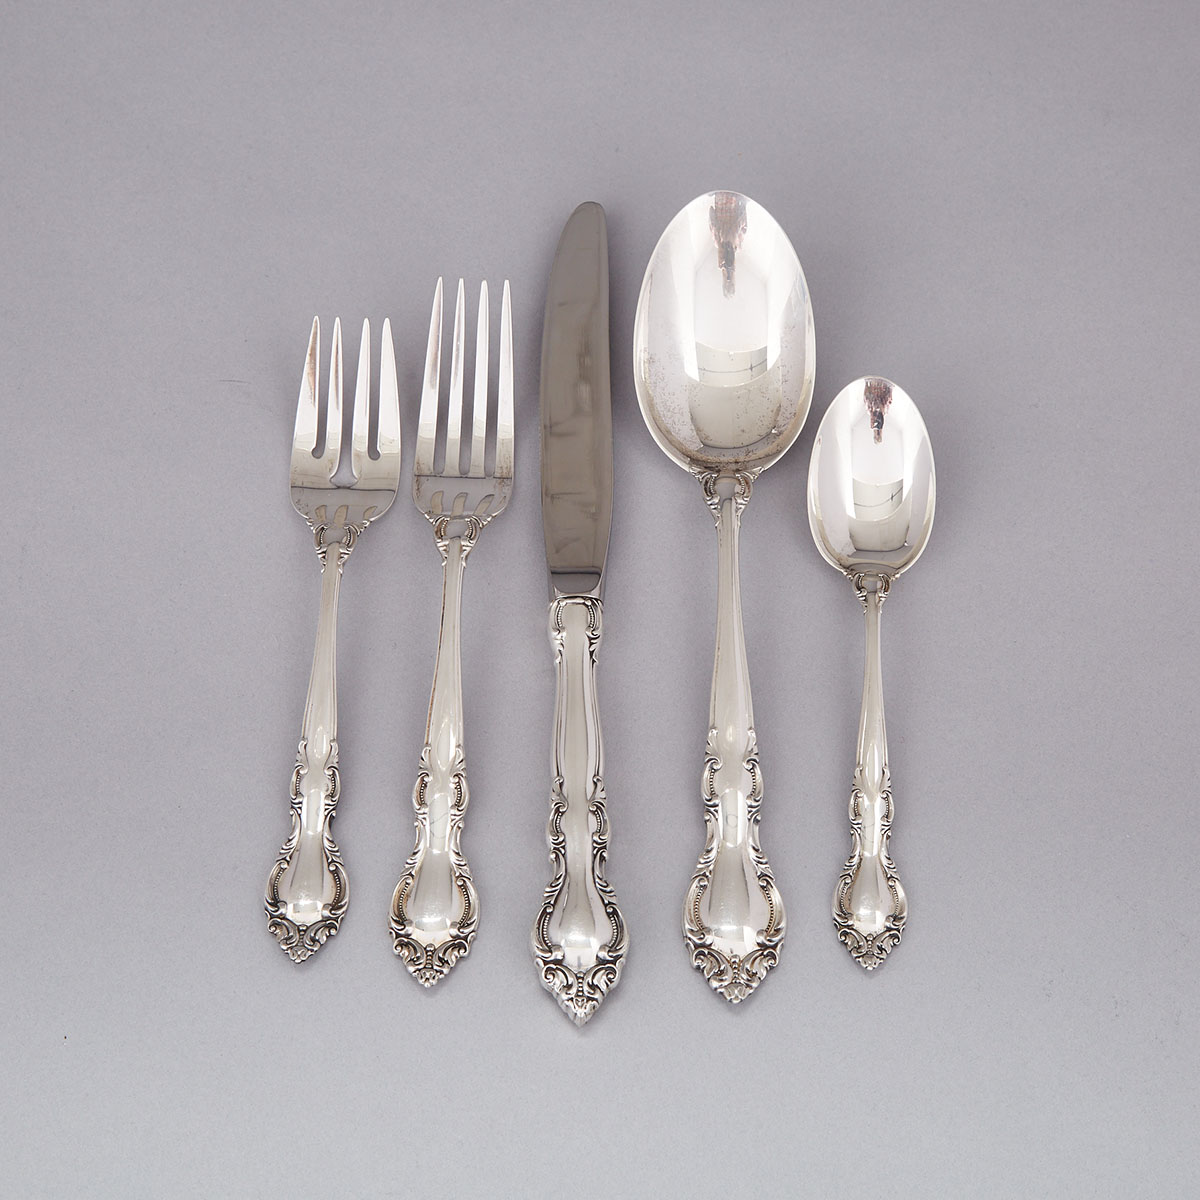 American Silver ‘Malvern’ Pattern Flatware, Lunt, Greenfield, Mass., 20th century